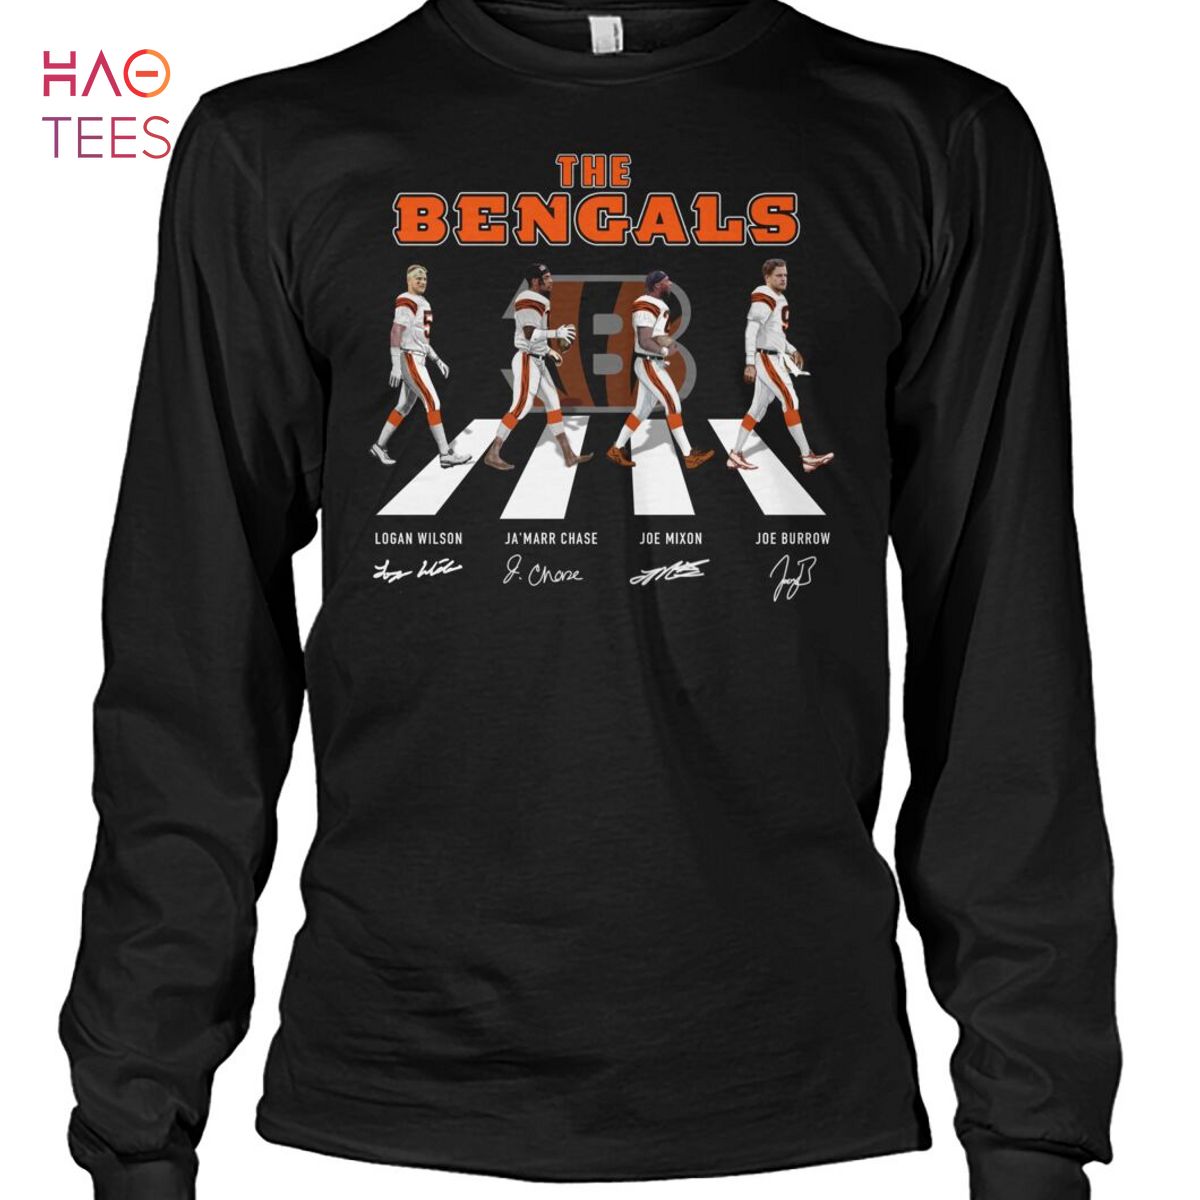 The Cincinnati Bengals Shirt Limited Edition